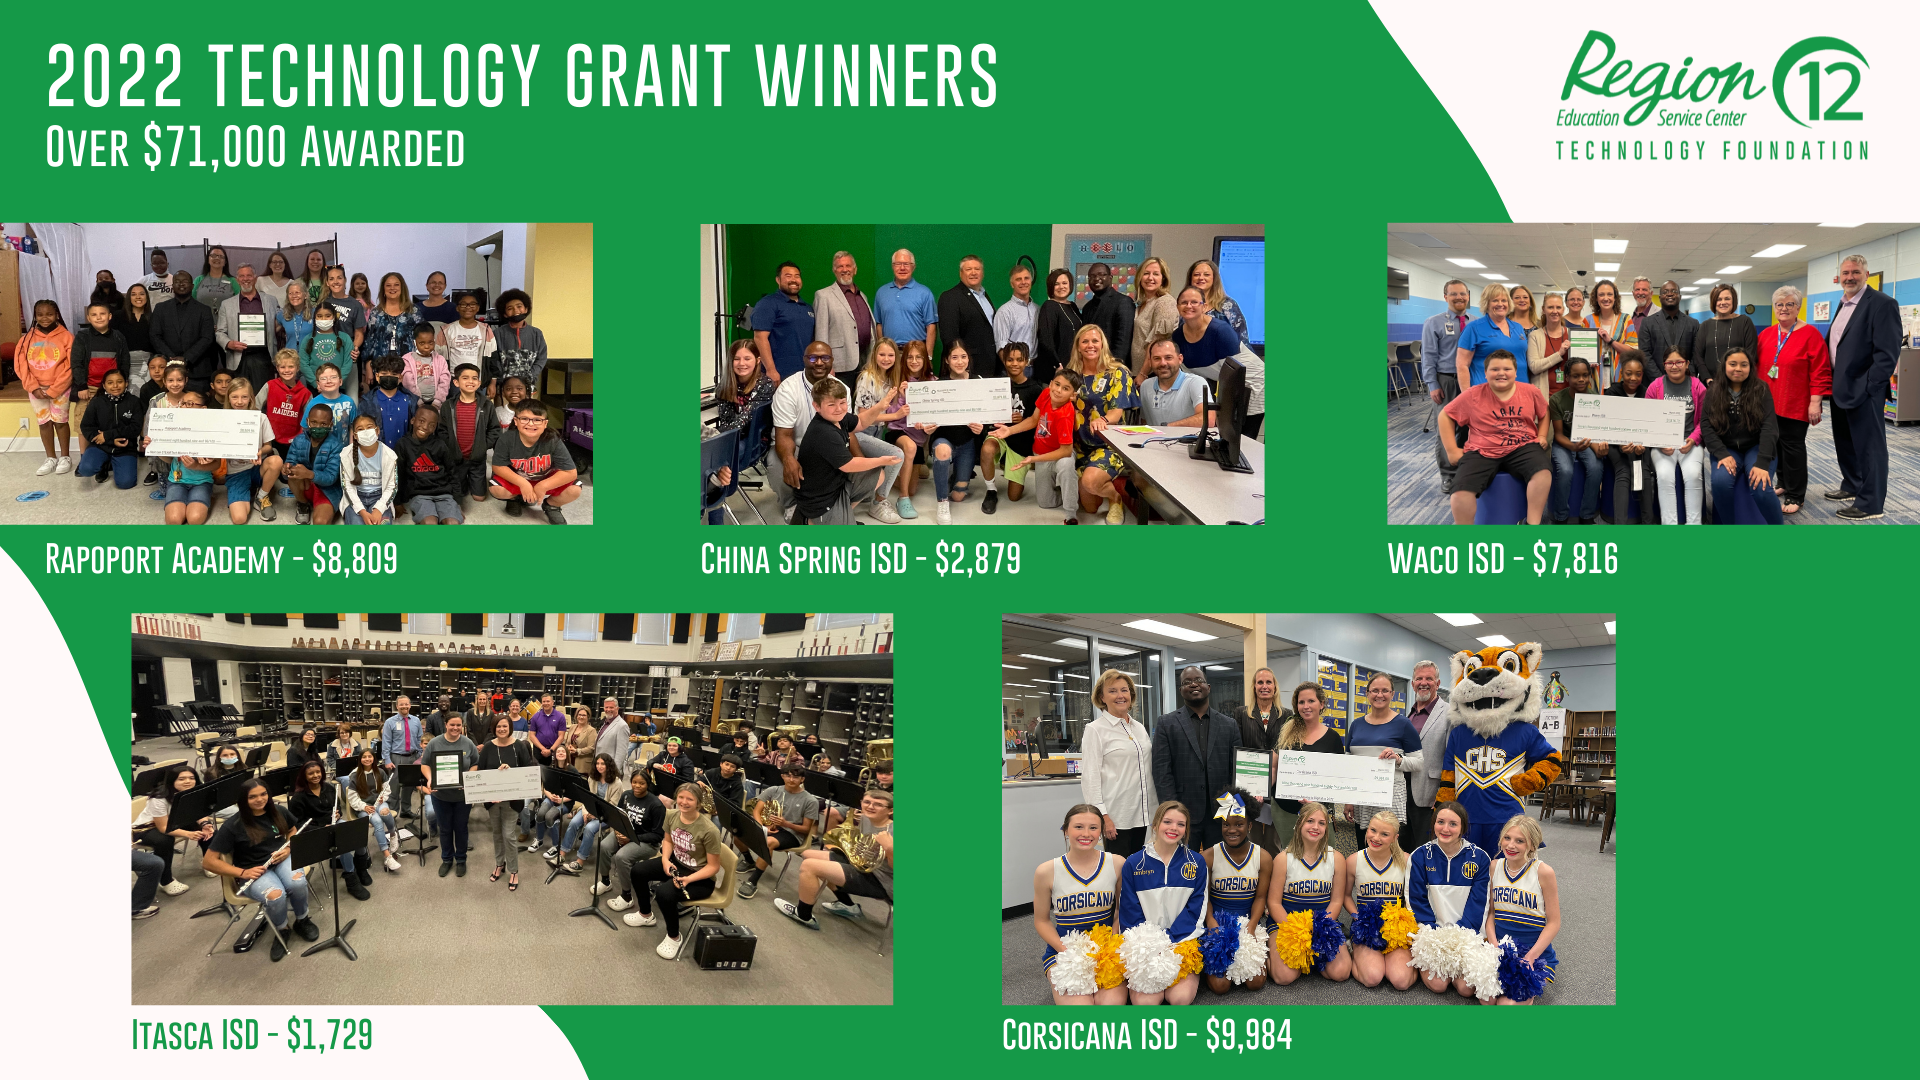 2022 Technology Grant Winners Over $71,000 Awarded